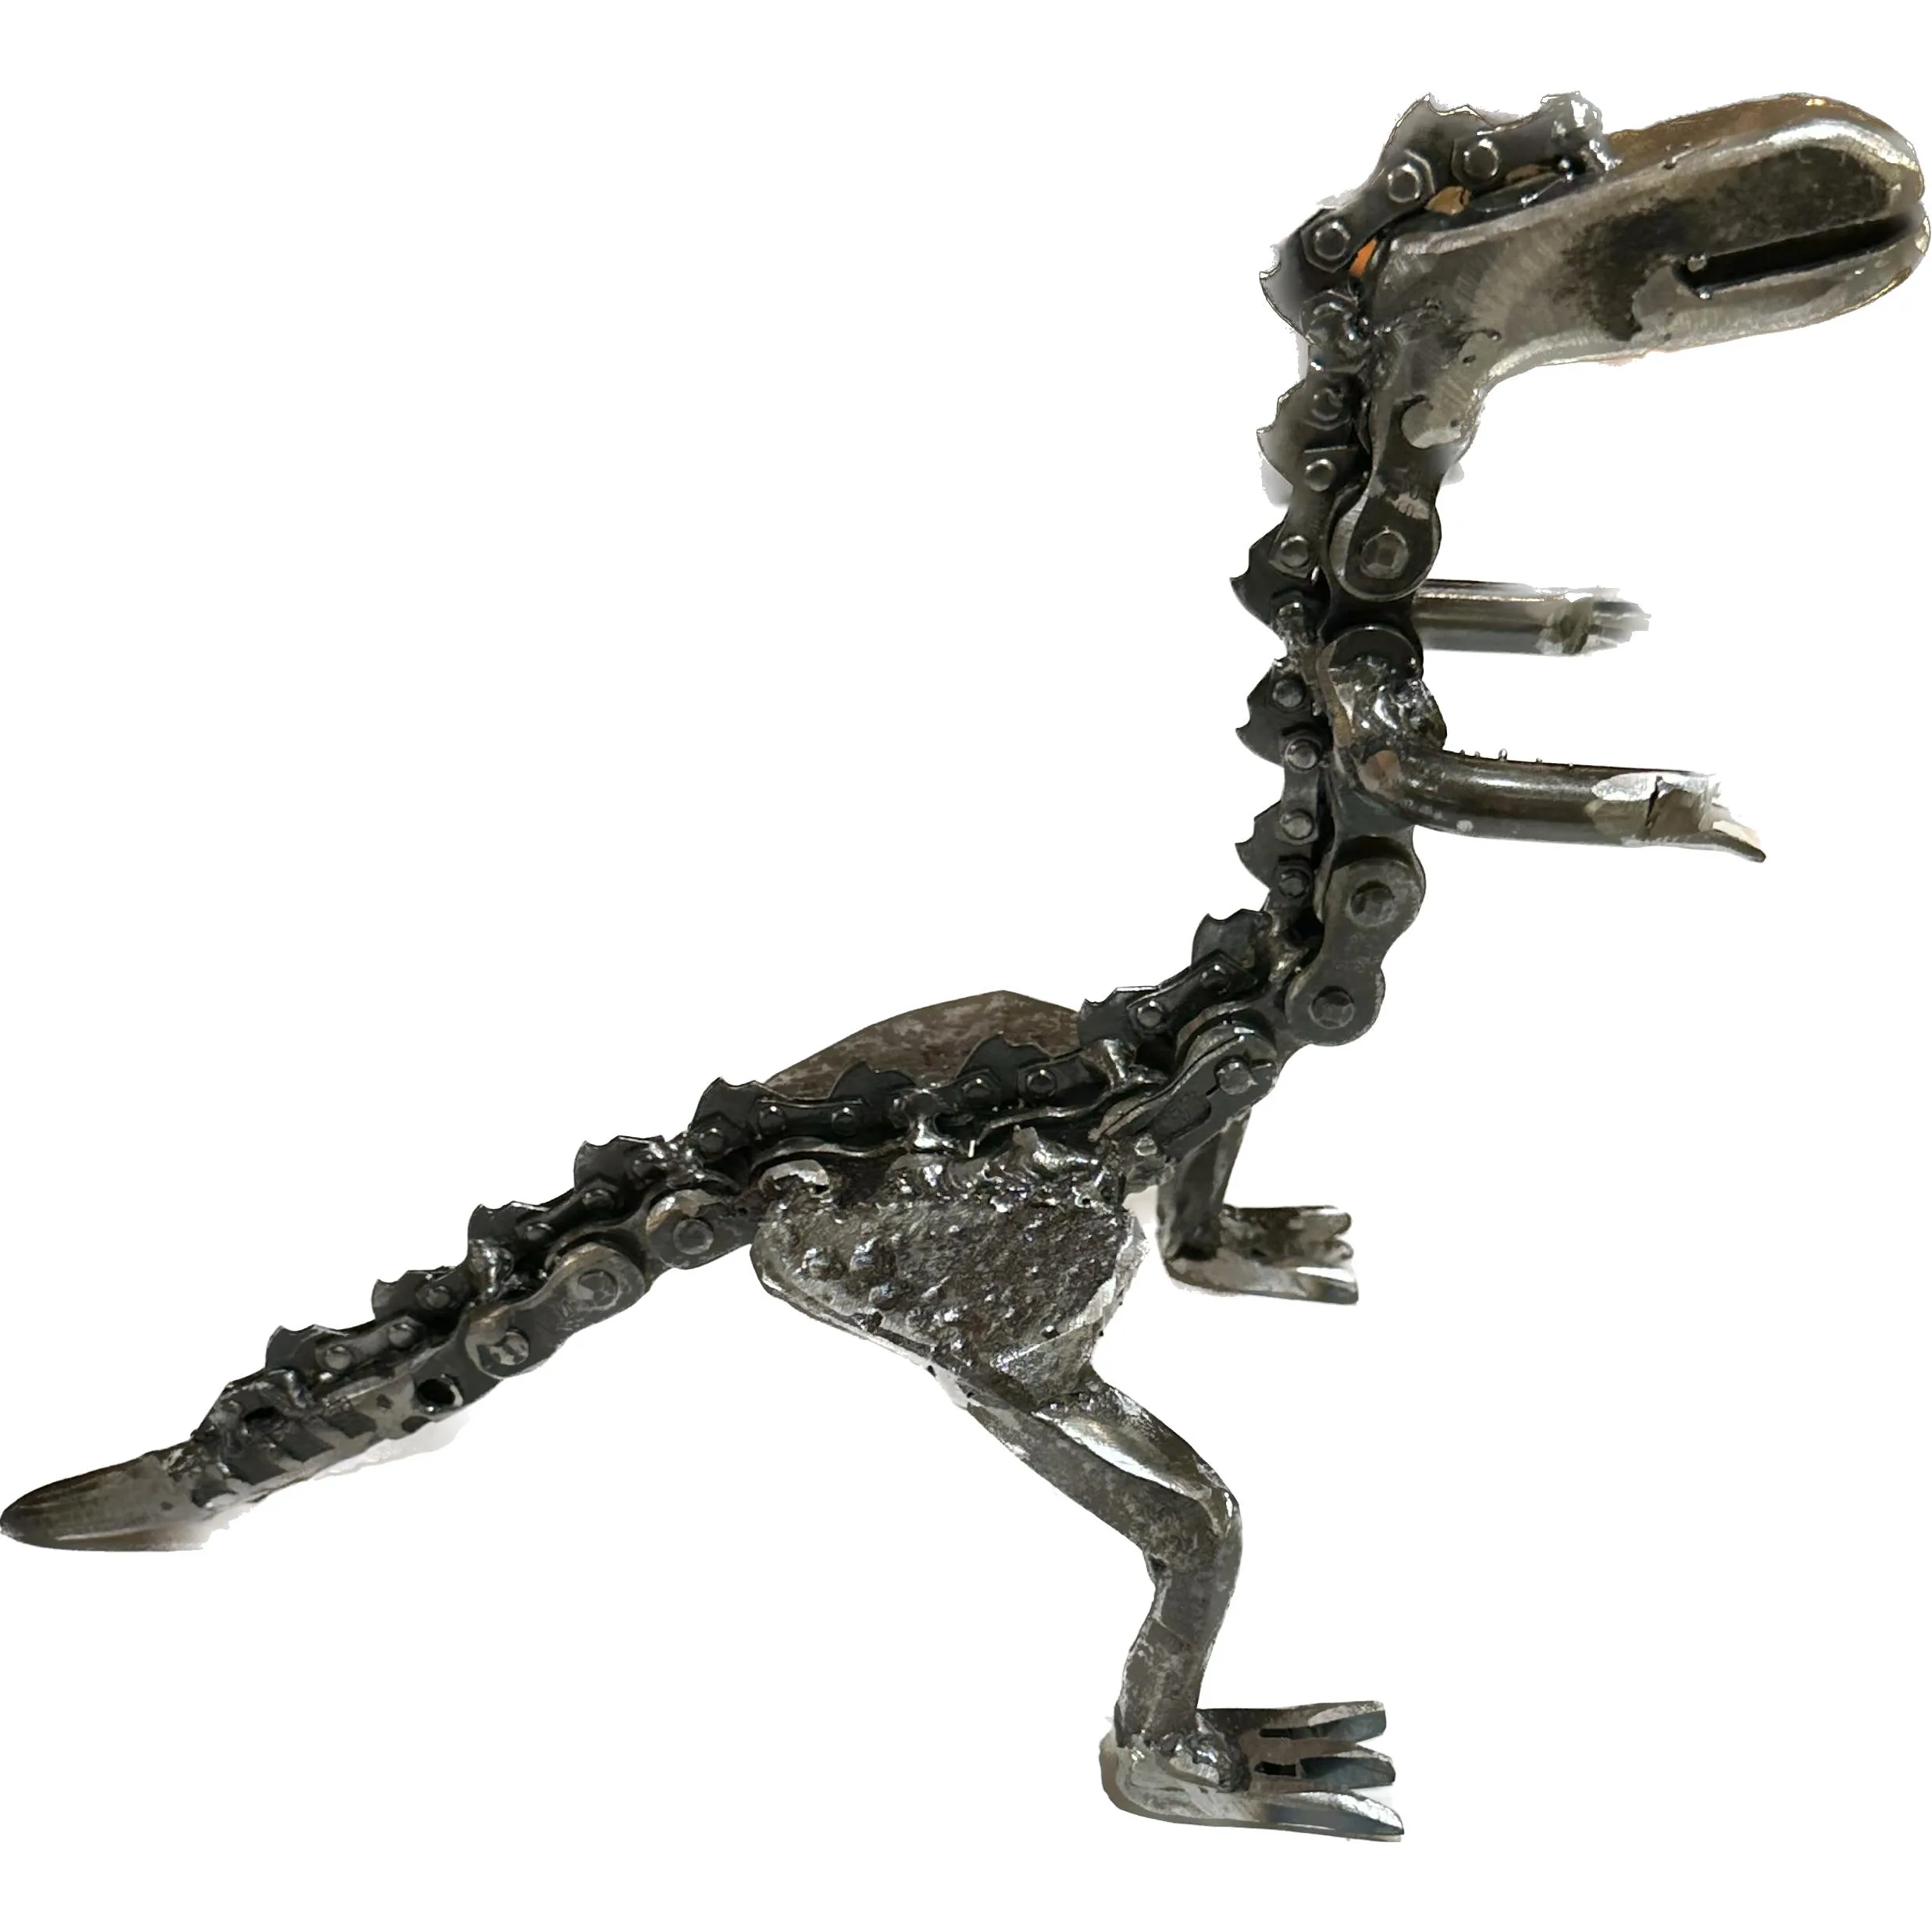 Dinosaur Metal Art,  “Robo Dino” Prehistoric Online